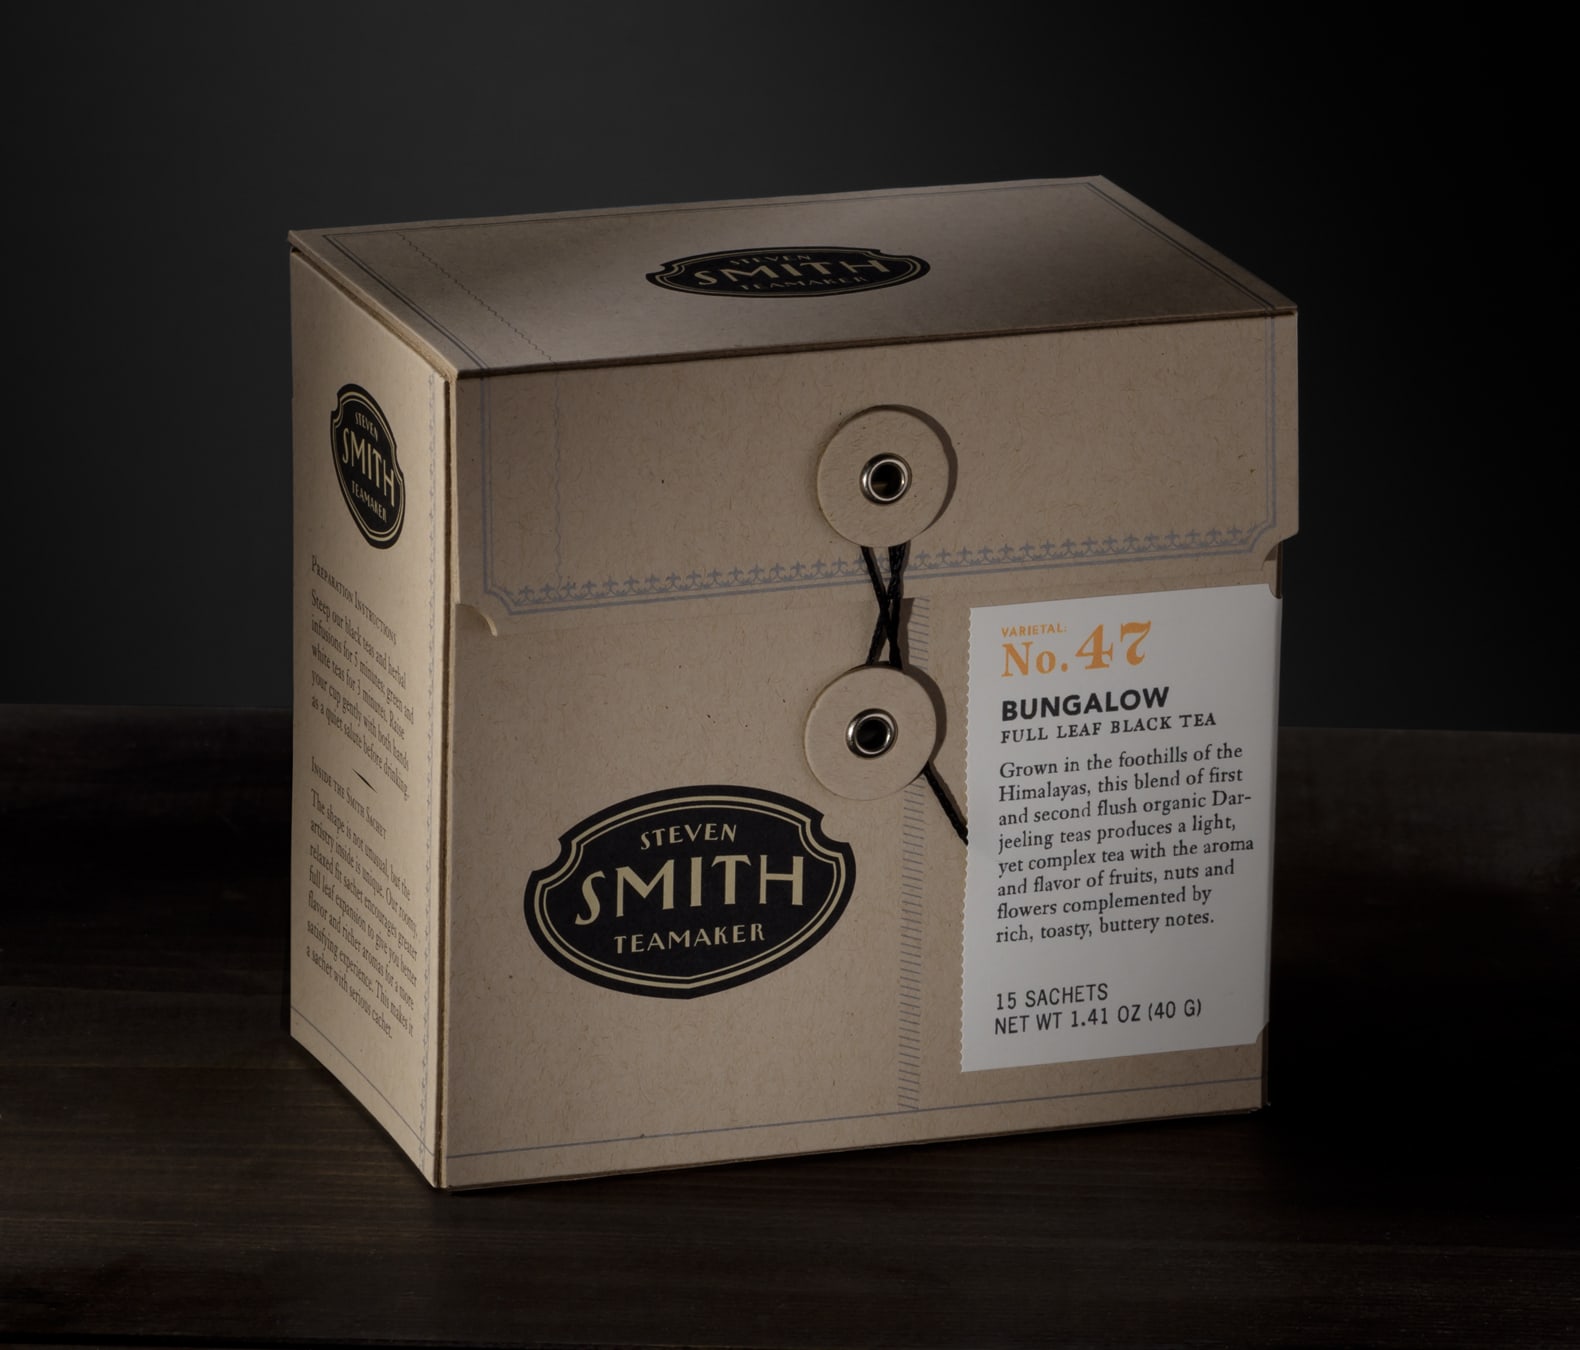 Steven Smith Teamaker tea package string tie box design